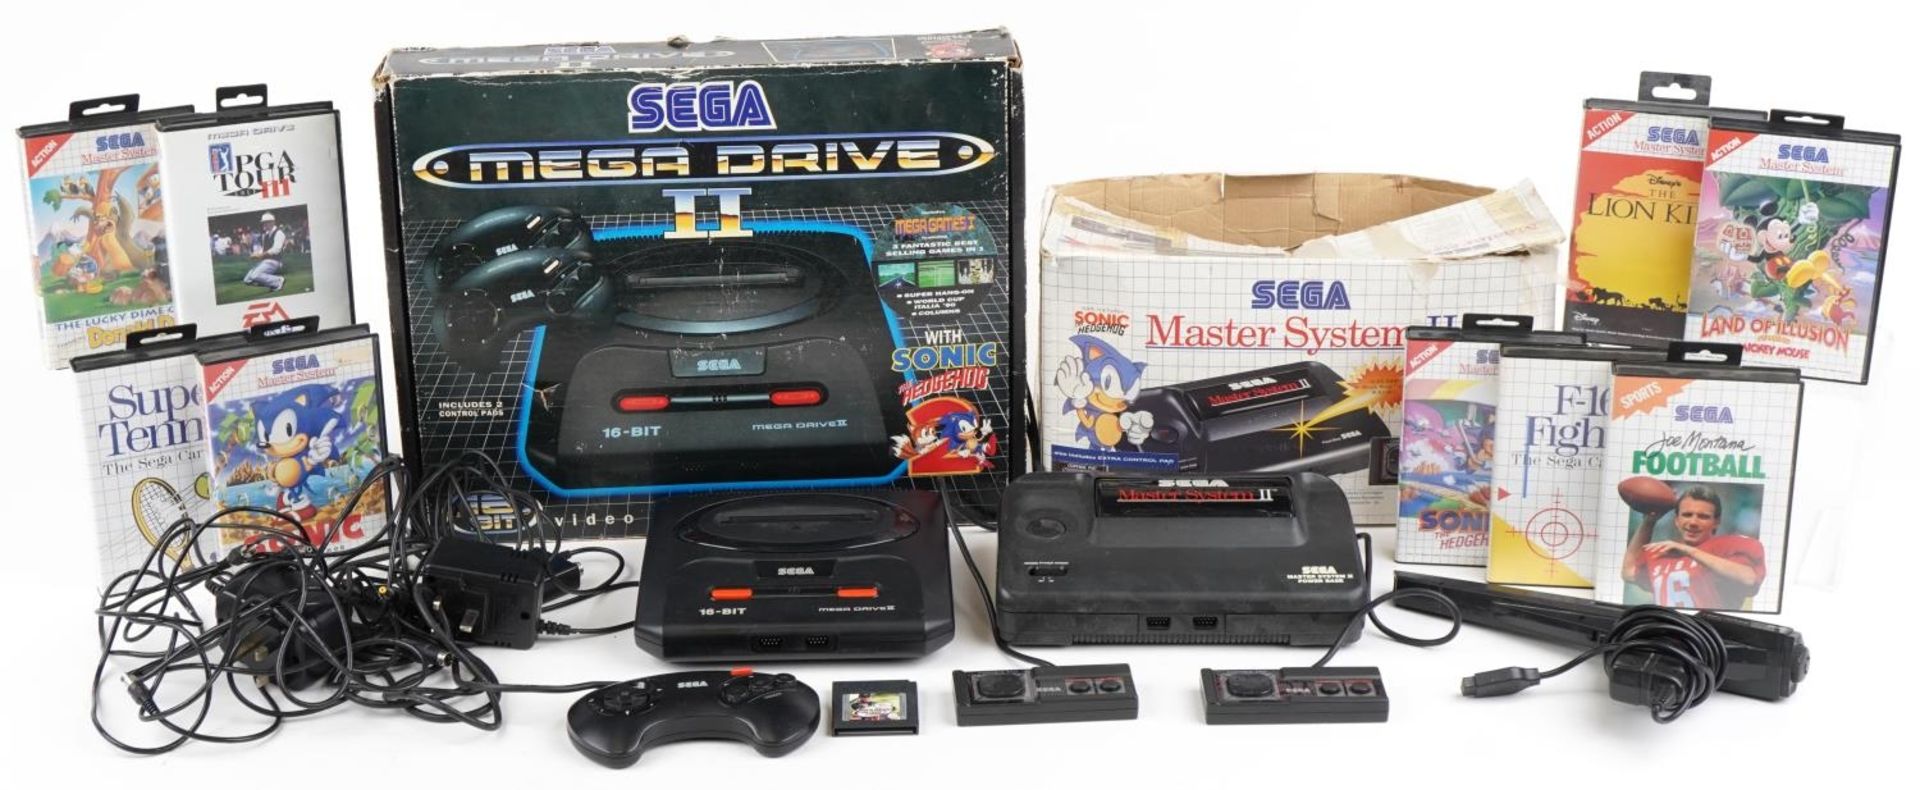 Vintage Sega games consoles and games including Sega Mega Drive II with box, Sega Master System II